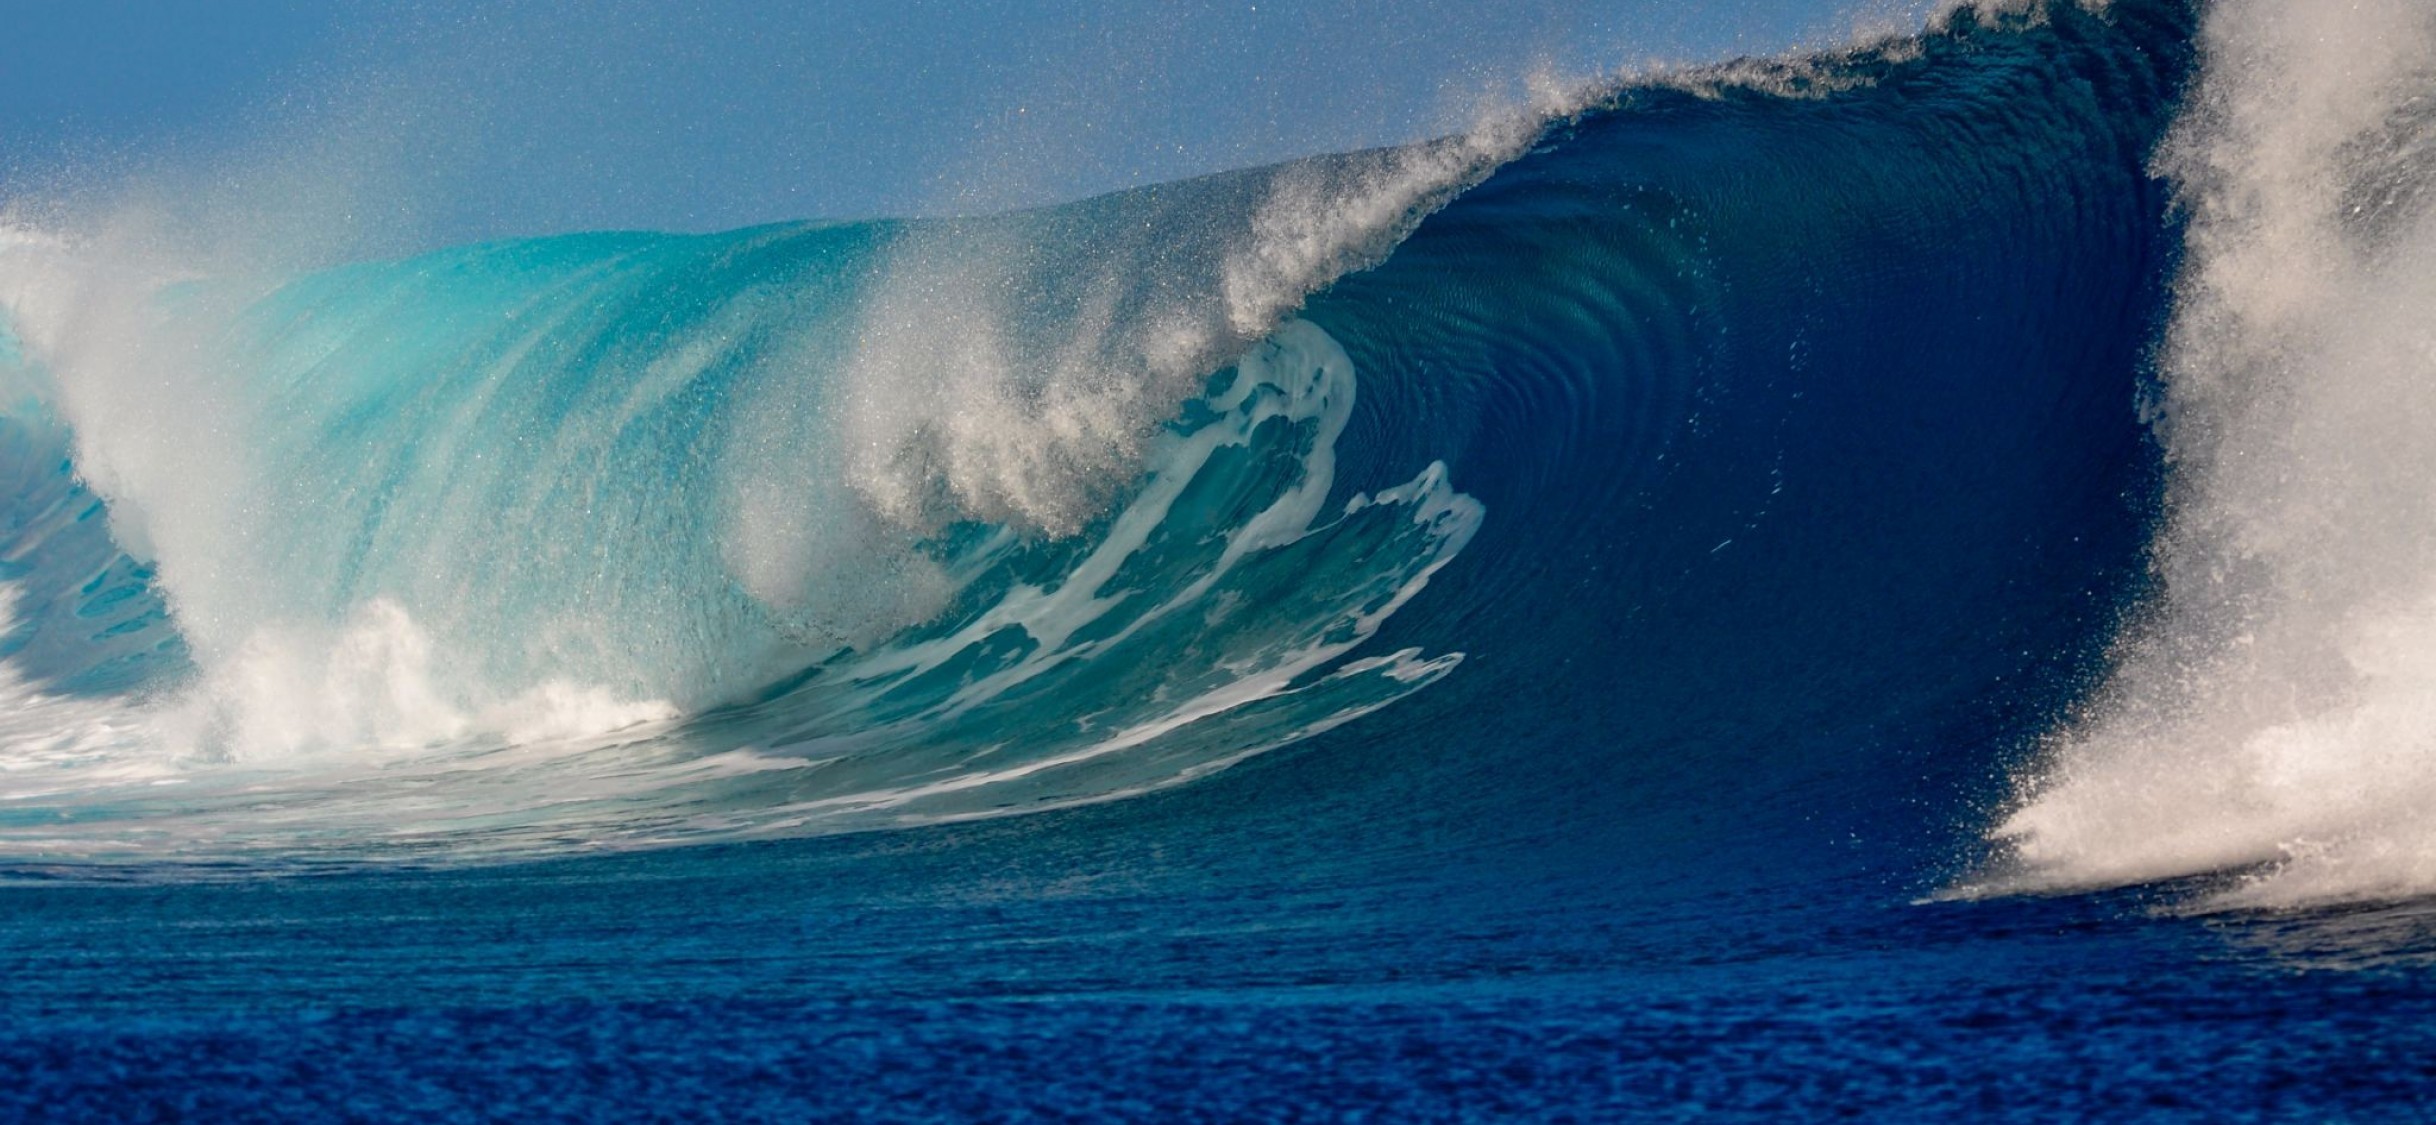 2436x1125 Beautiful Ocean Waves Live Wallpaper for Desktop and Mobiles - iPhone X